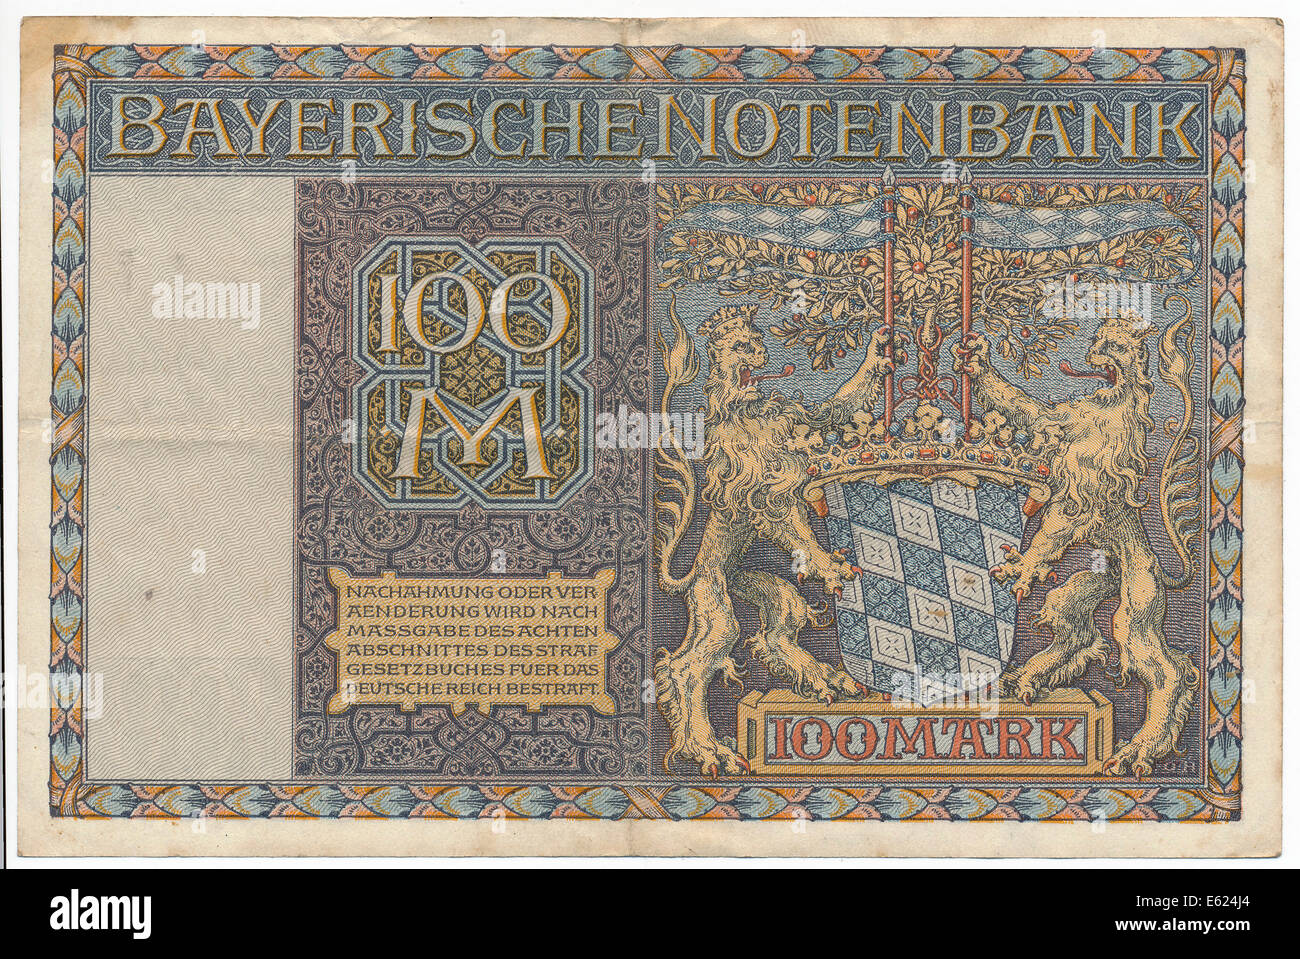 Old banknote, 100 marks, back, Bayerische Notenbank, Bavarian Central Bank, 1922 Stock Photo